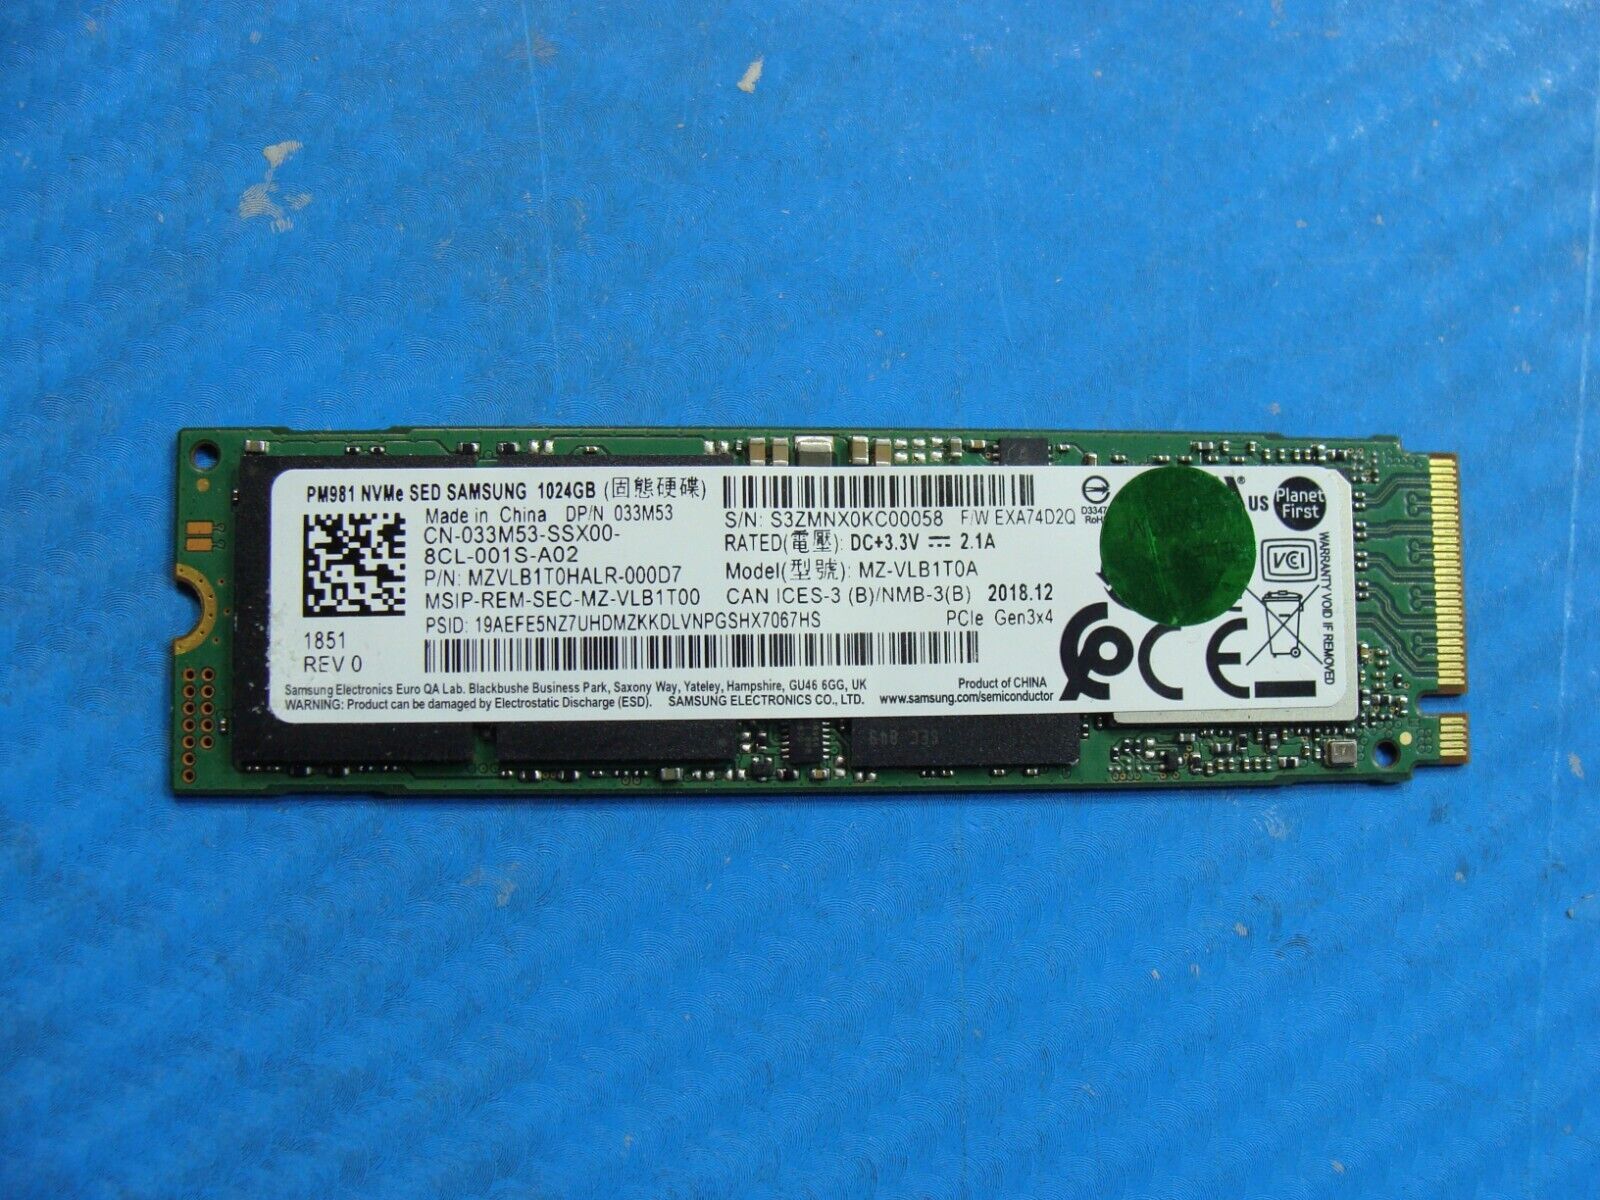 Dell 7730 Samsung 1TB M.2 NVMe SSD Solid State Drive MZVLB1T0HALR-000D7 33M53